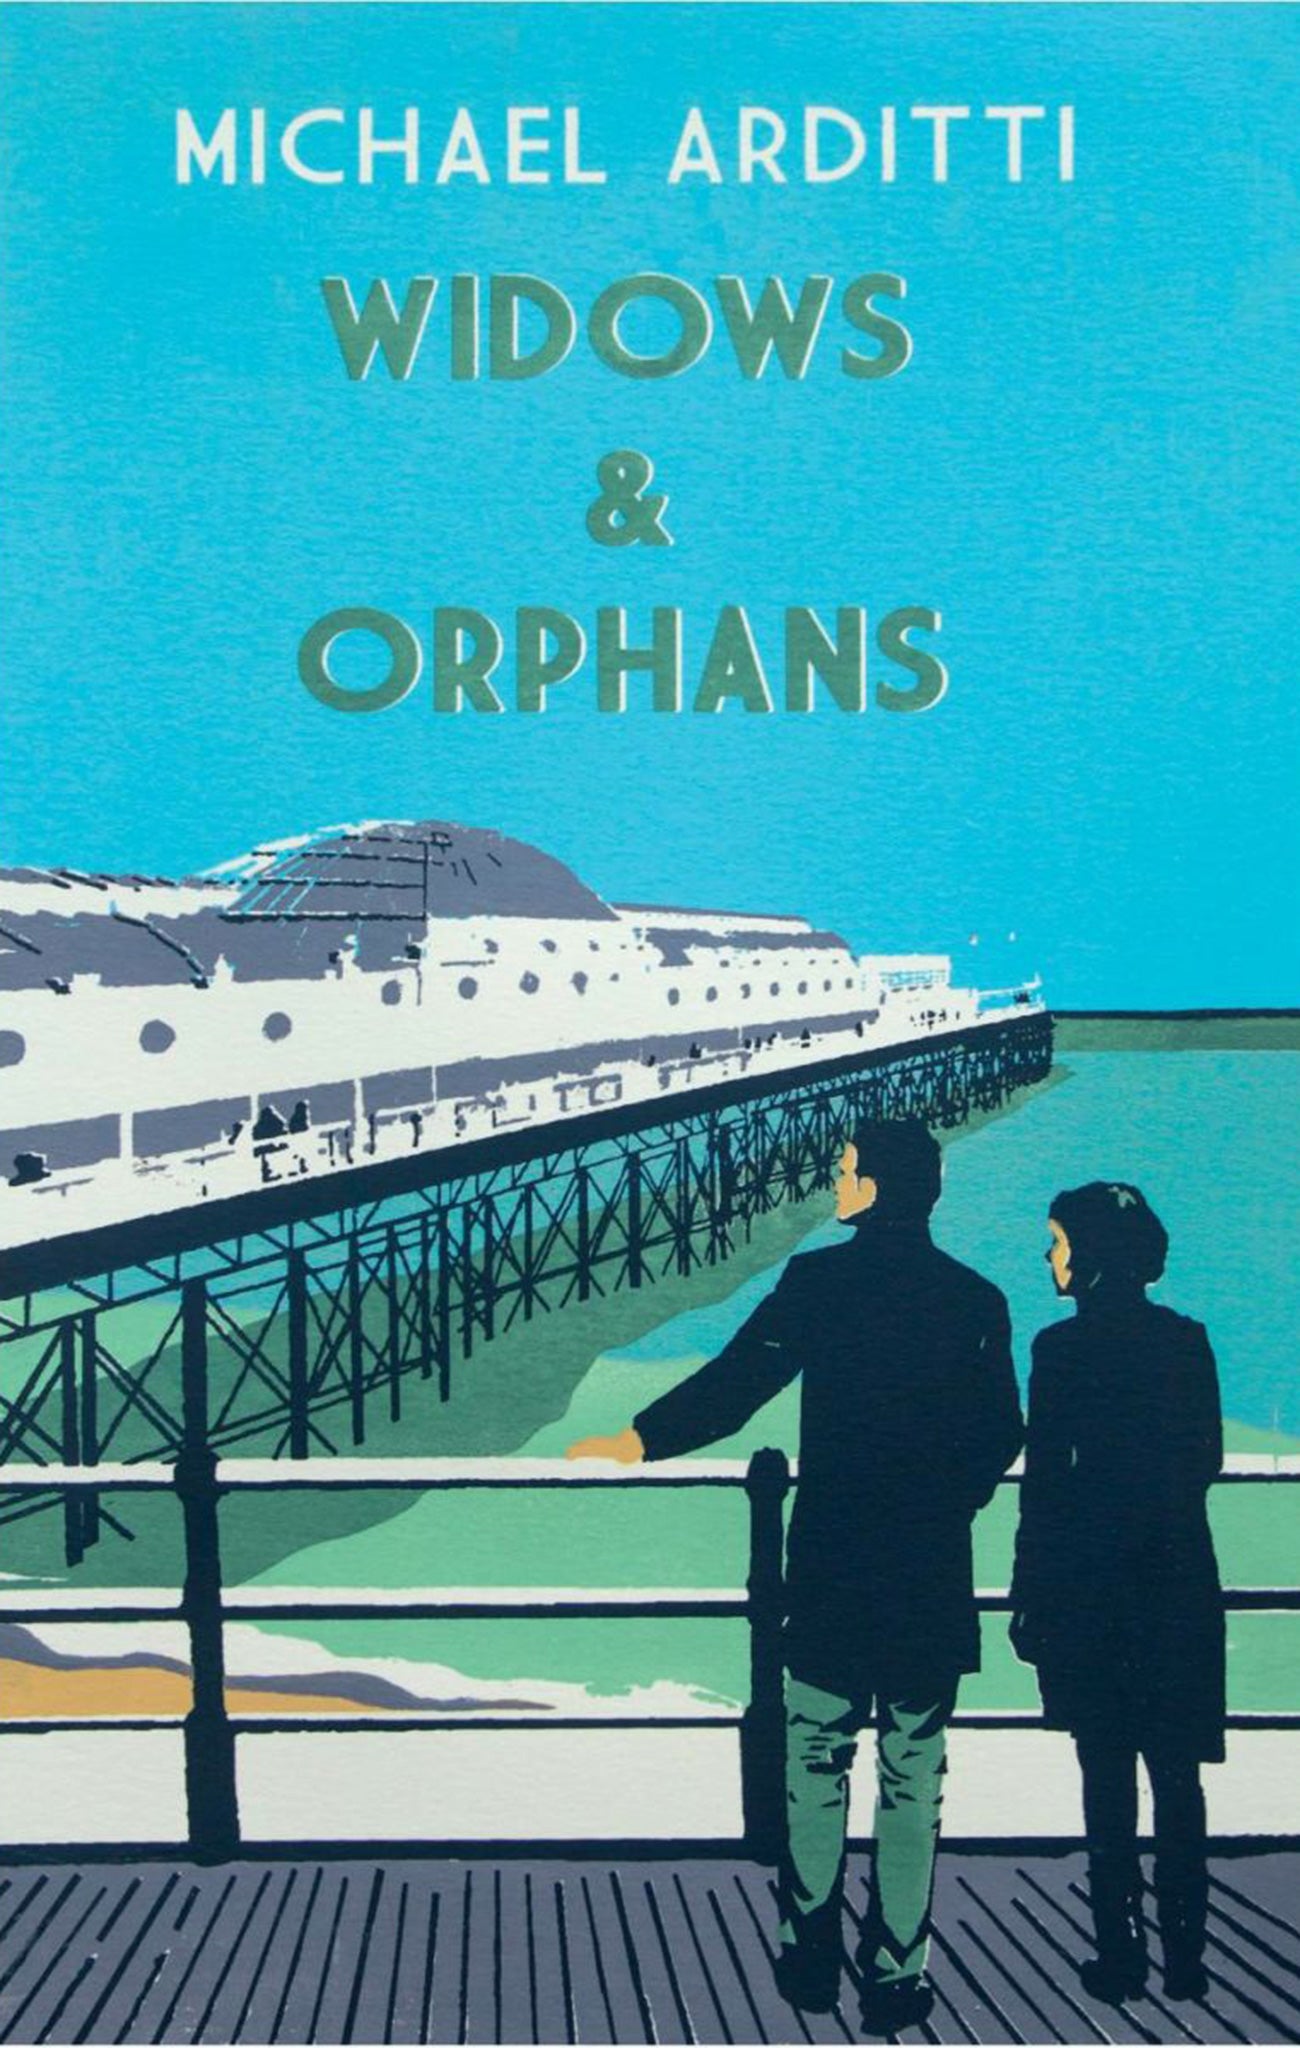 Widows & Orphans by Michael Arditti